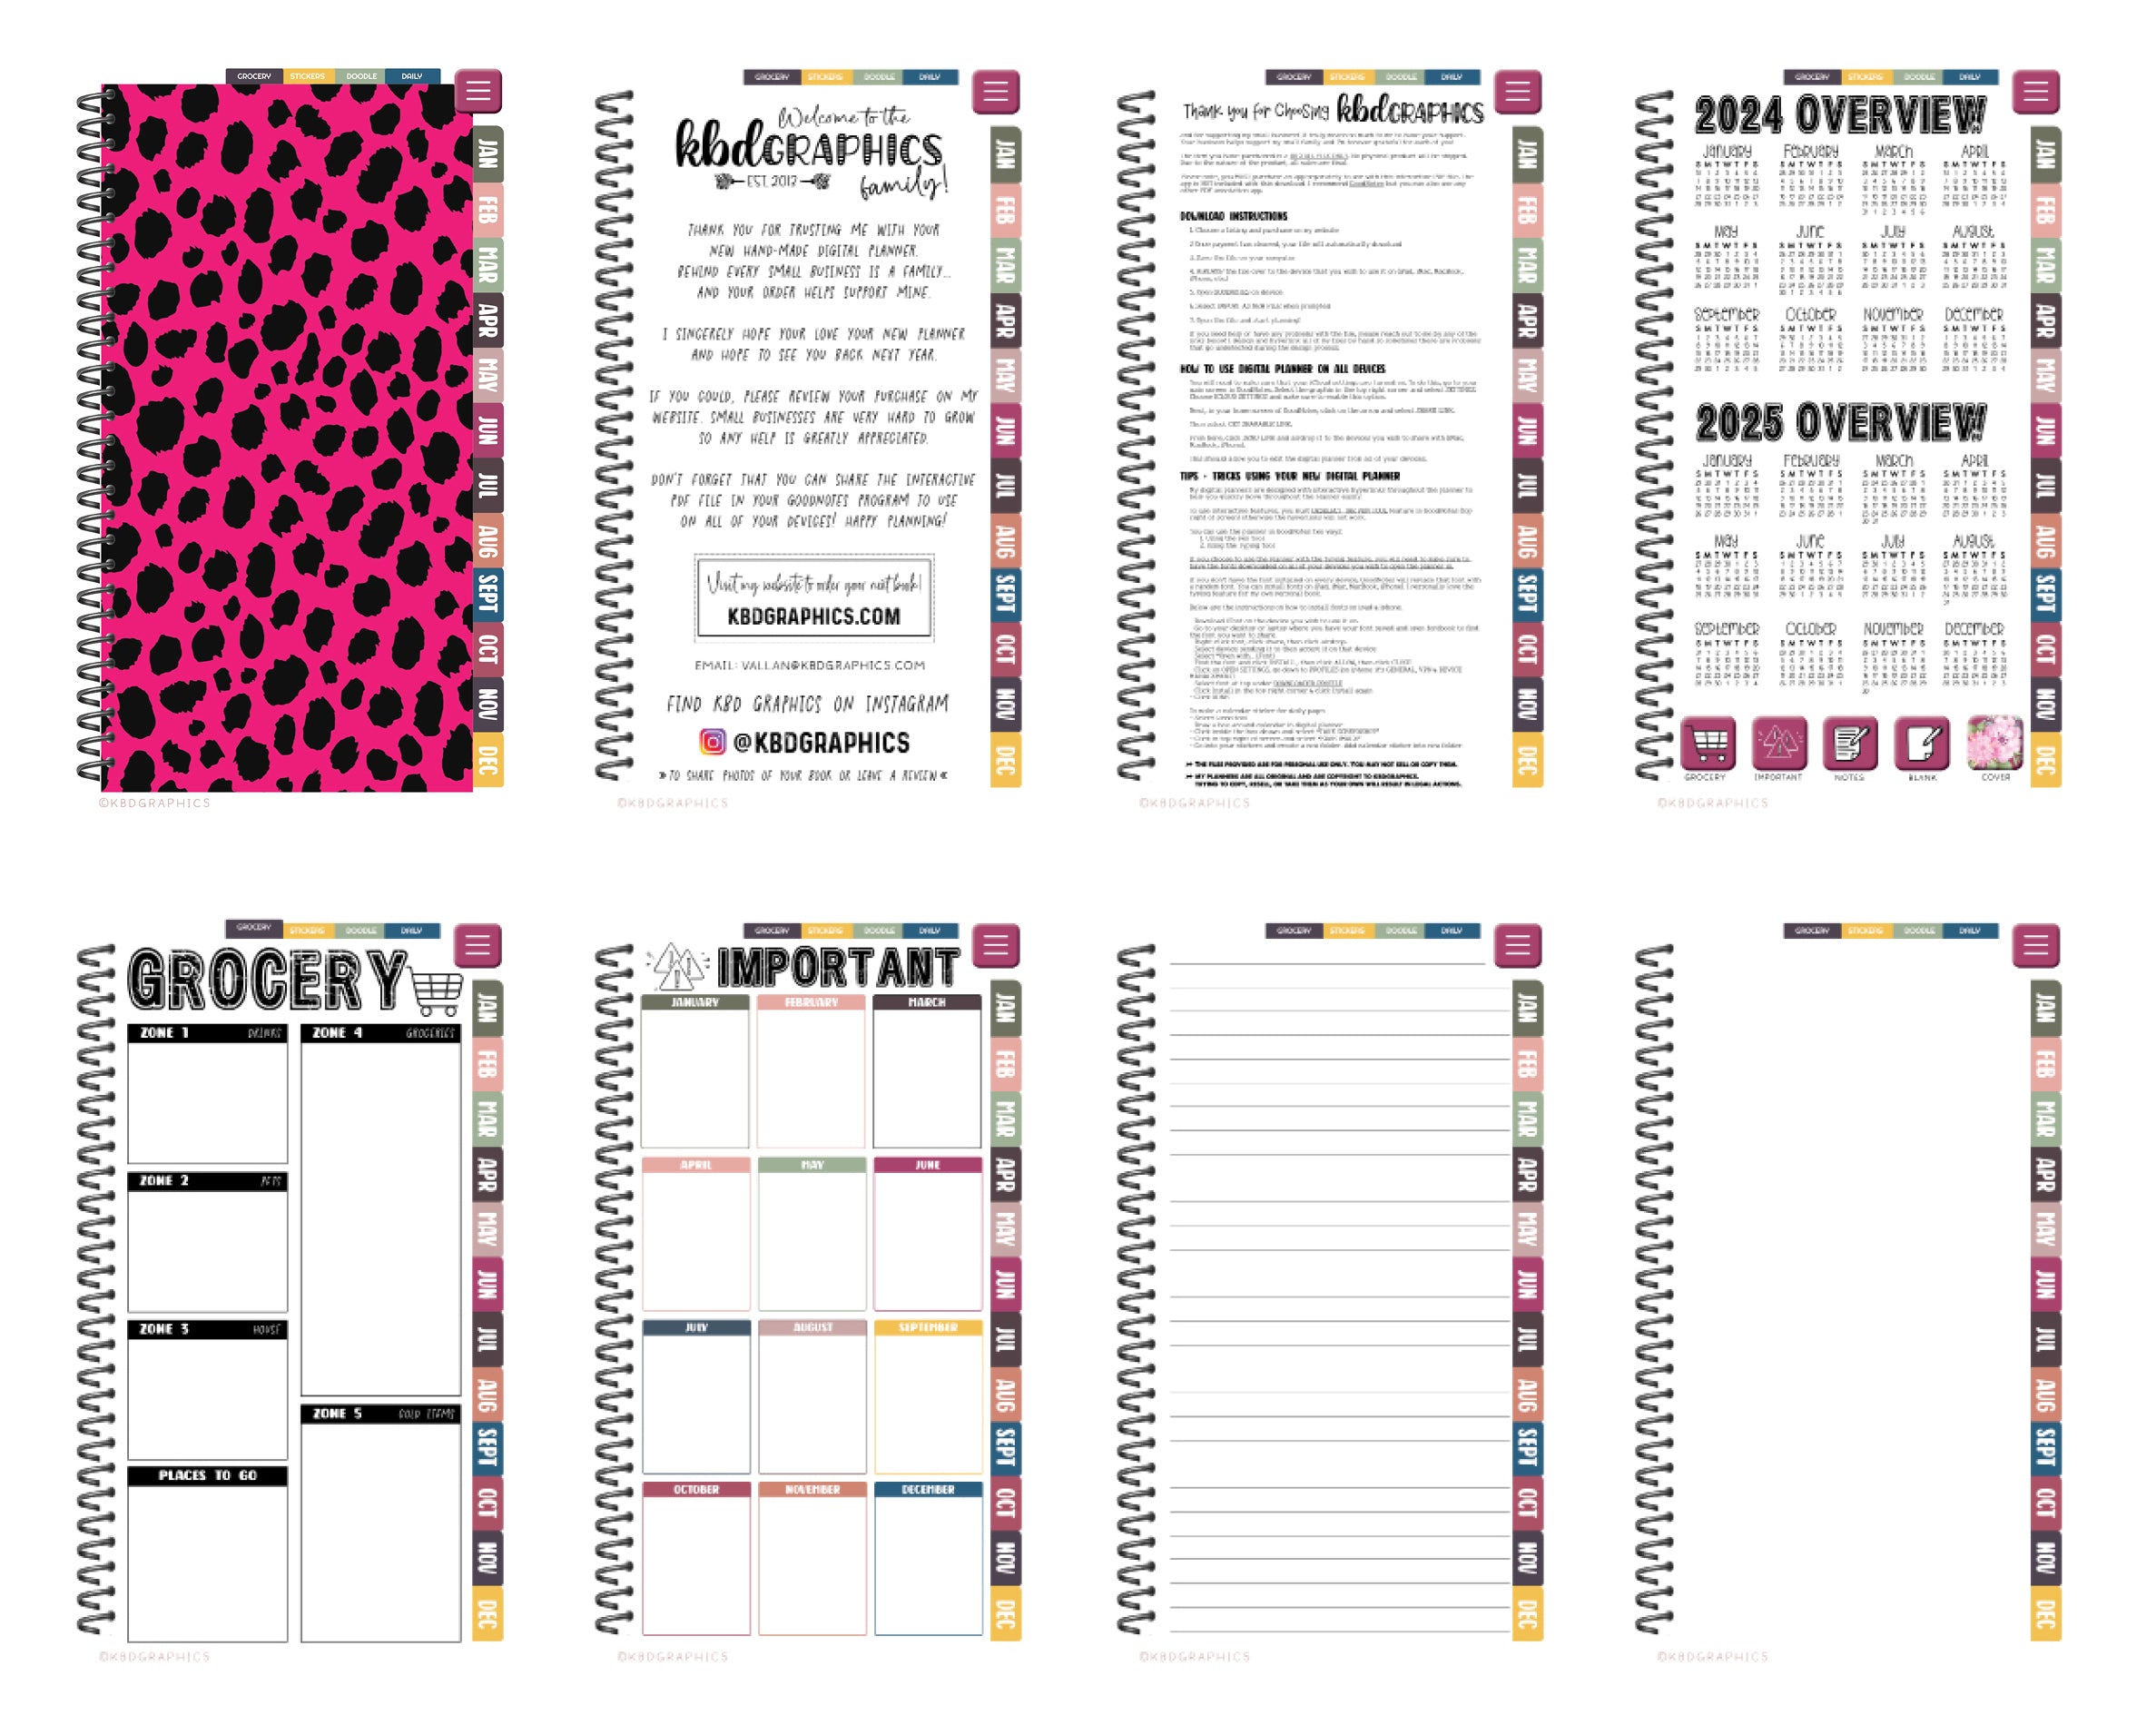 2024 PhoneLife Simple Calendar Digital Planner - PINK BLACK DOTS